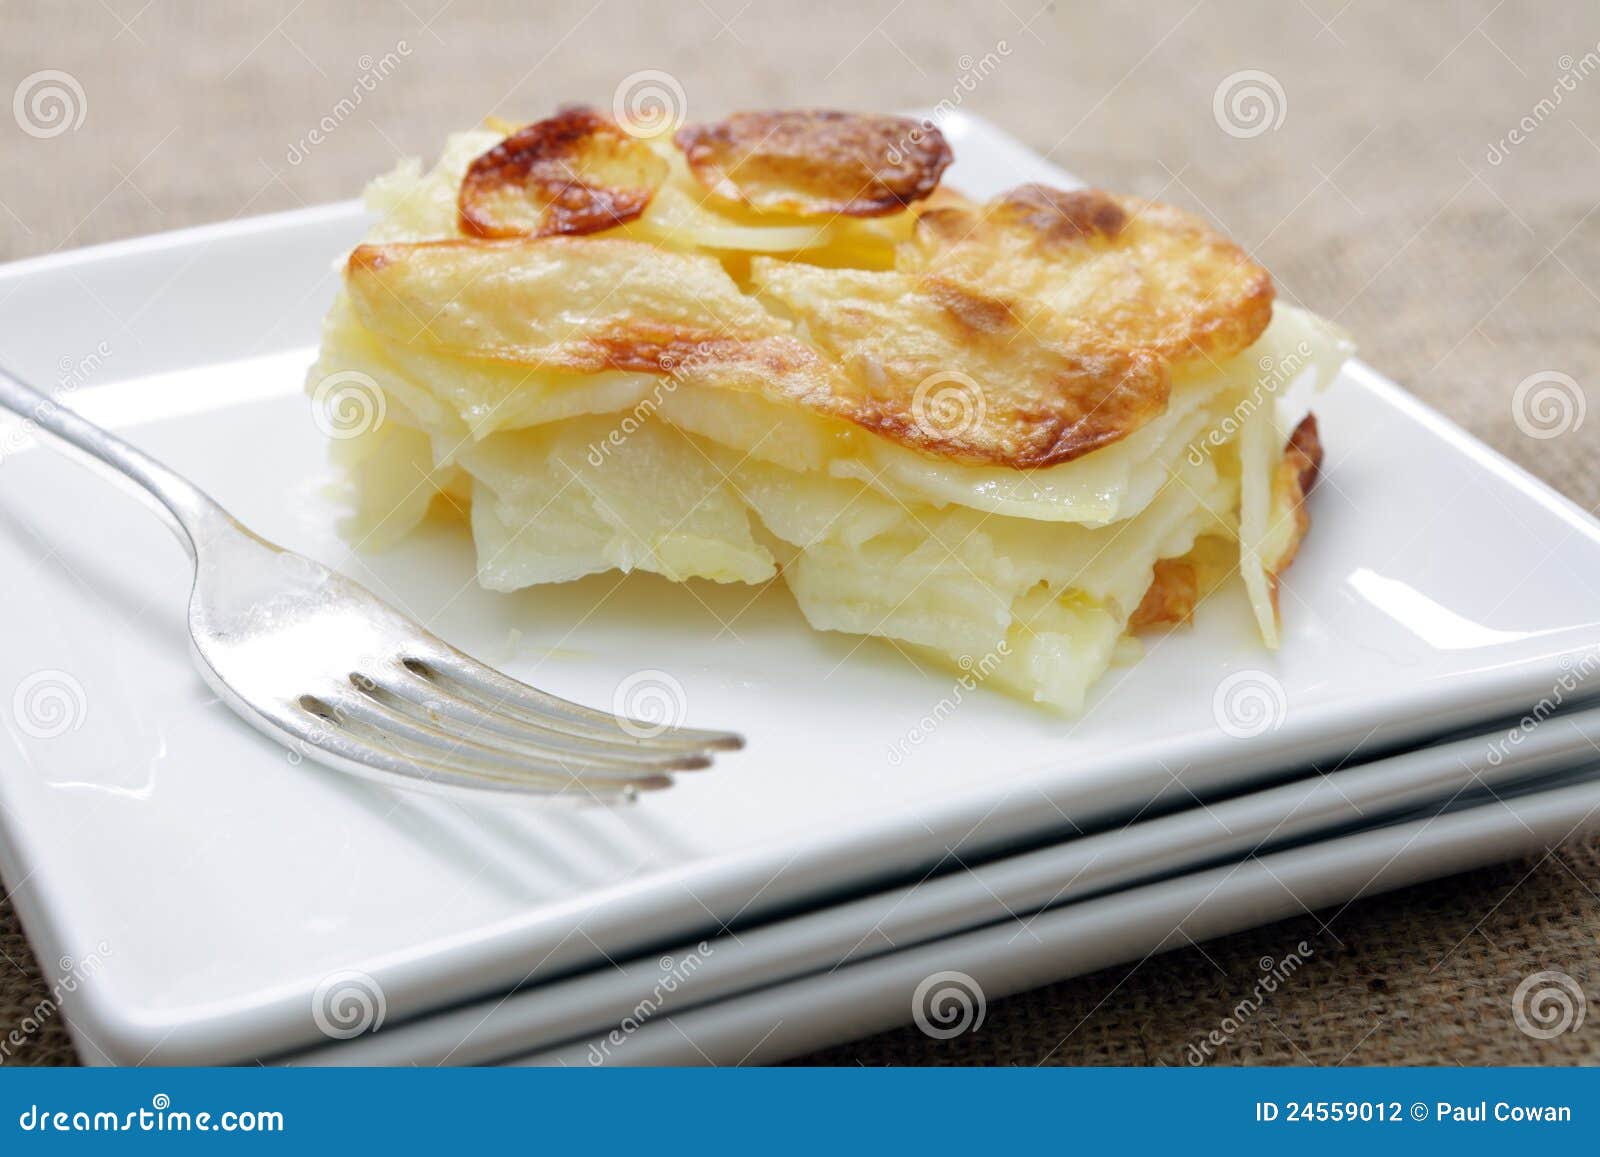 potatoes anna on a plate